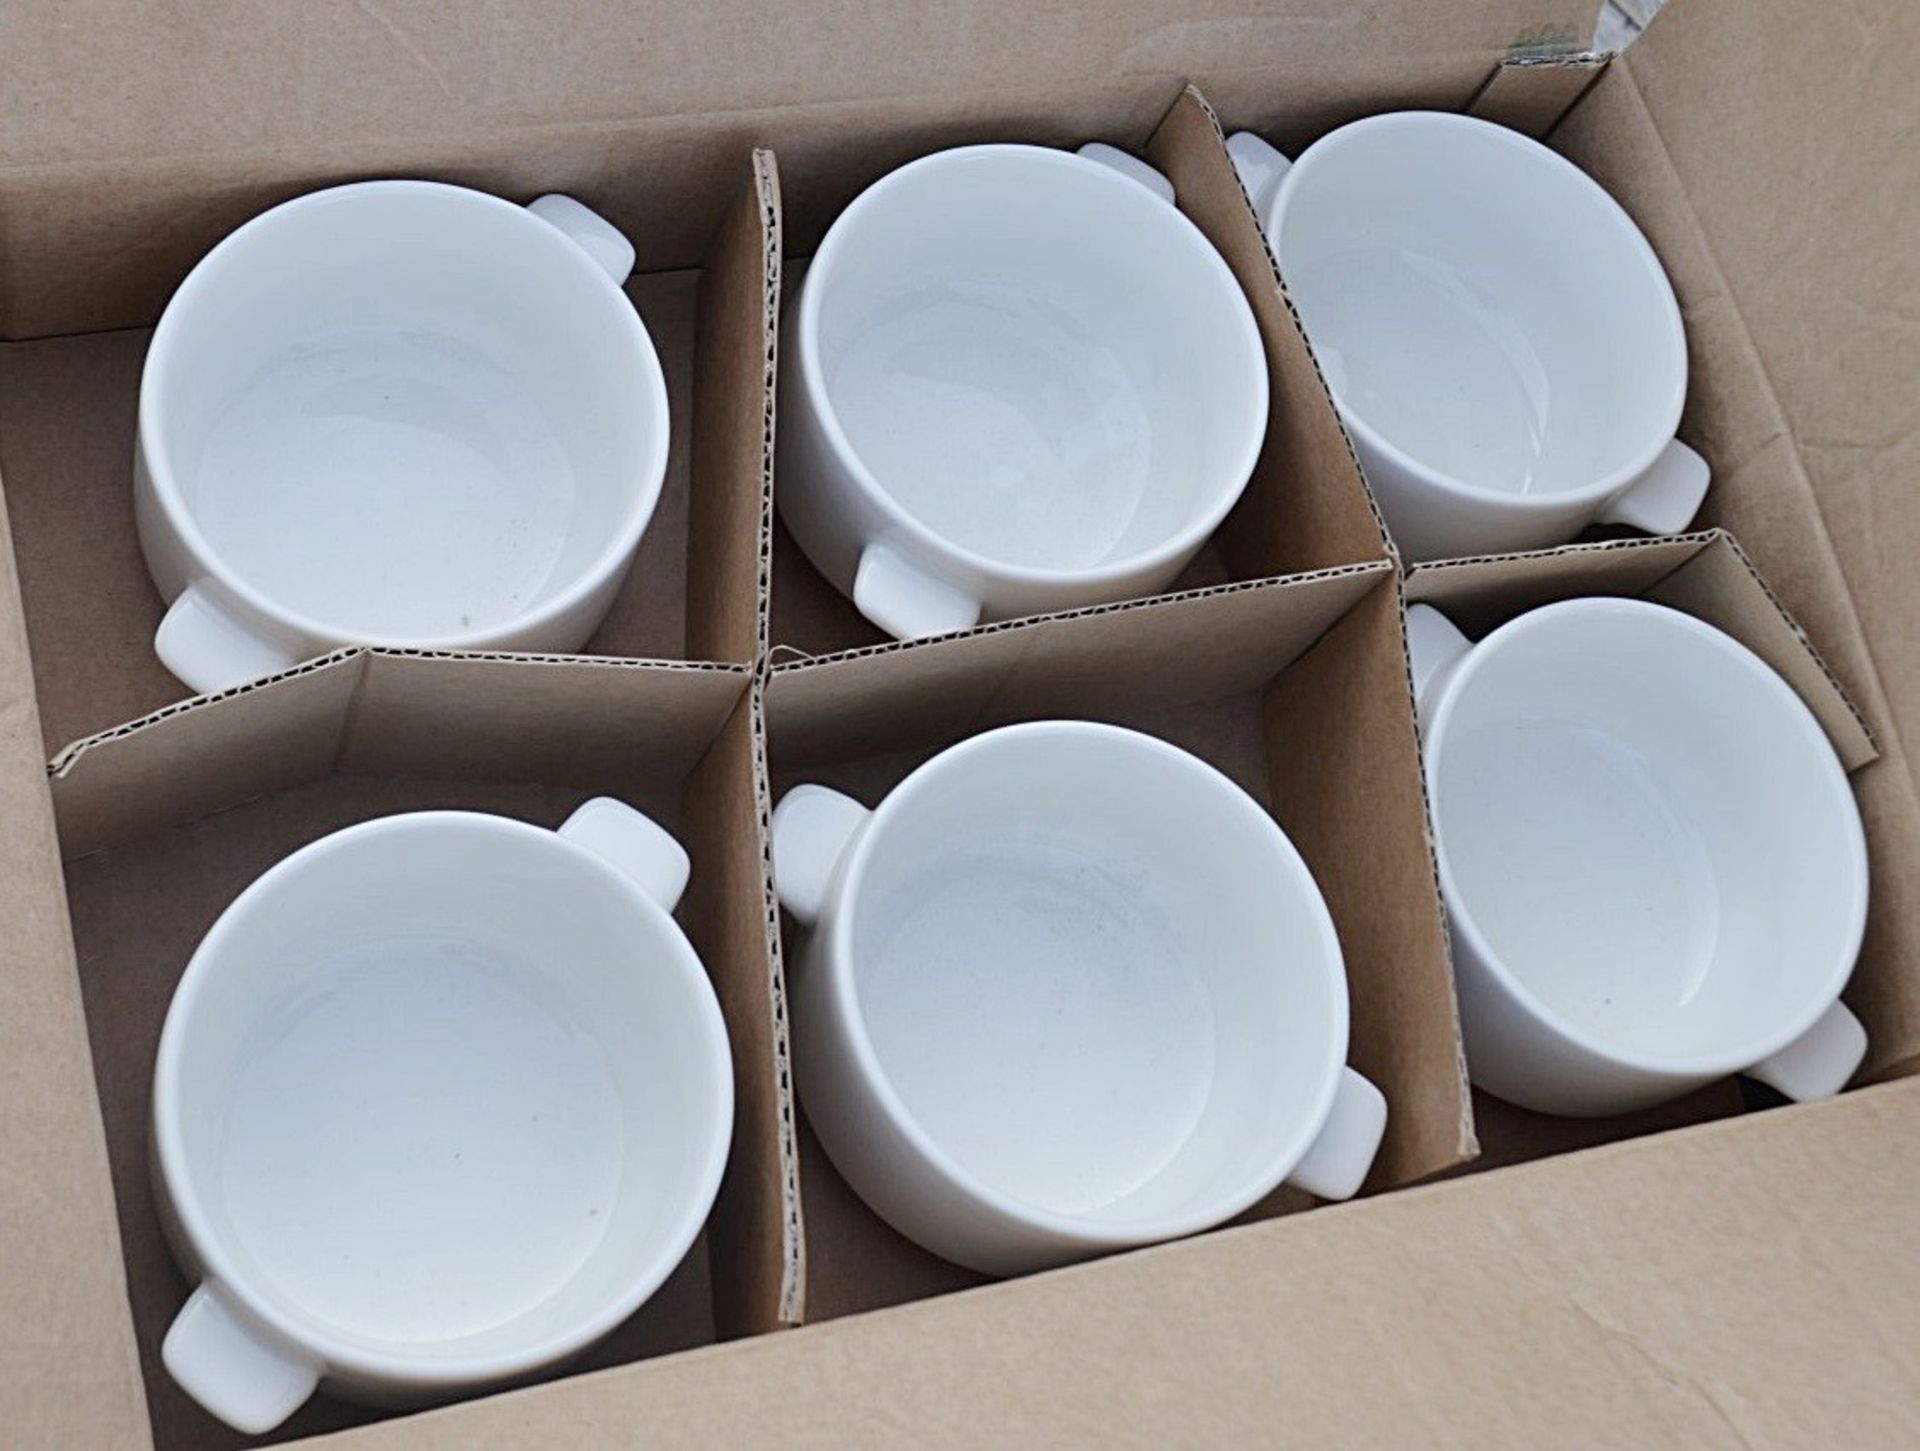 12 x RAK Porcelain Banquet 30cl Ivory Porcelain Lugged Soup Bowl With Handles - Image 2 of 4